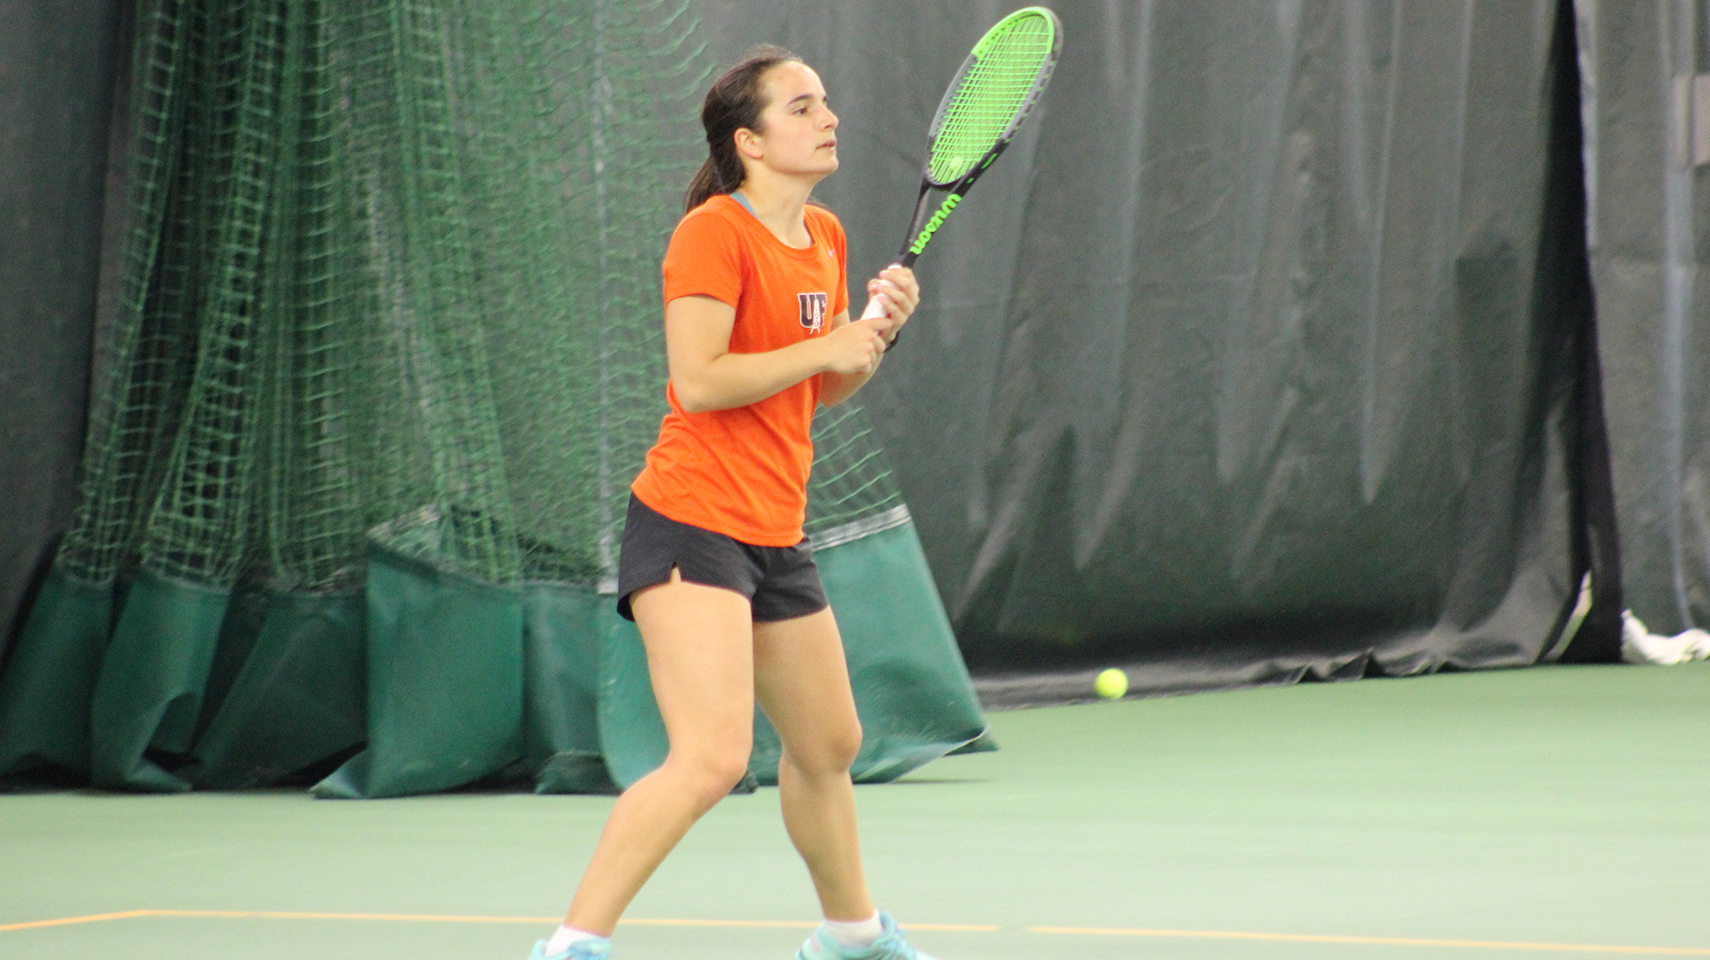 Women's tennis player in orange